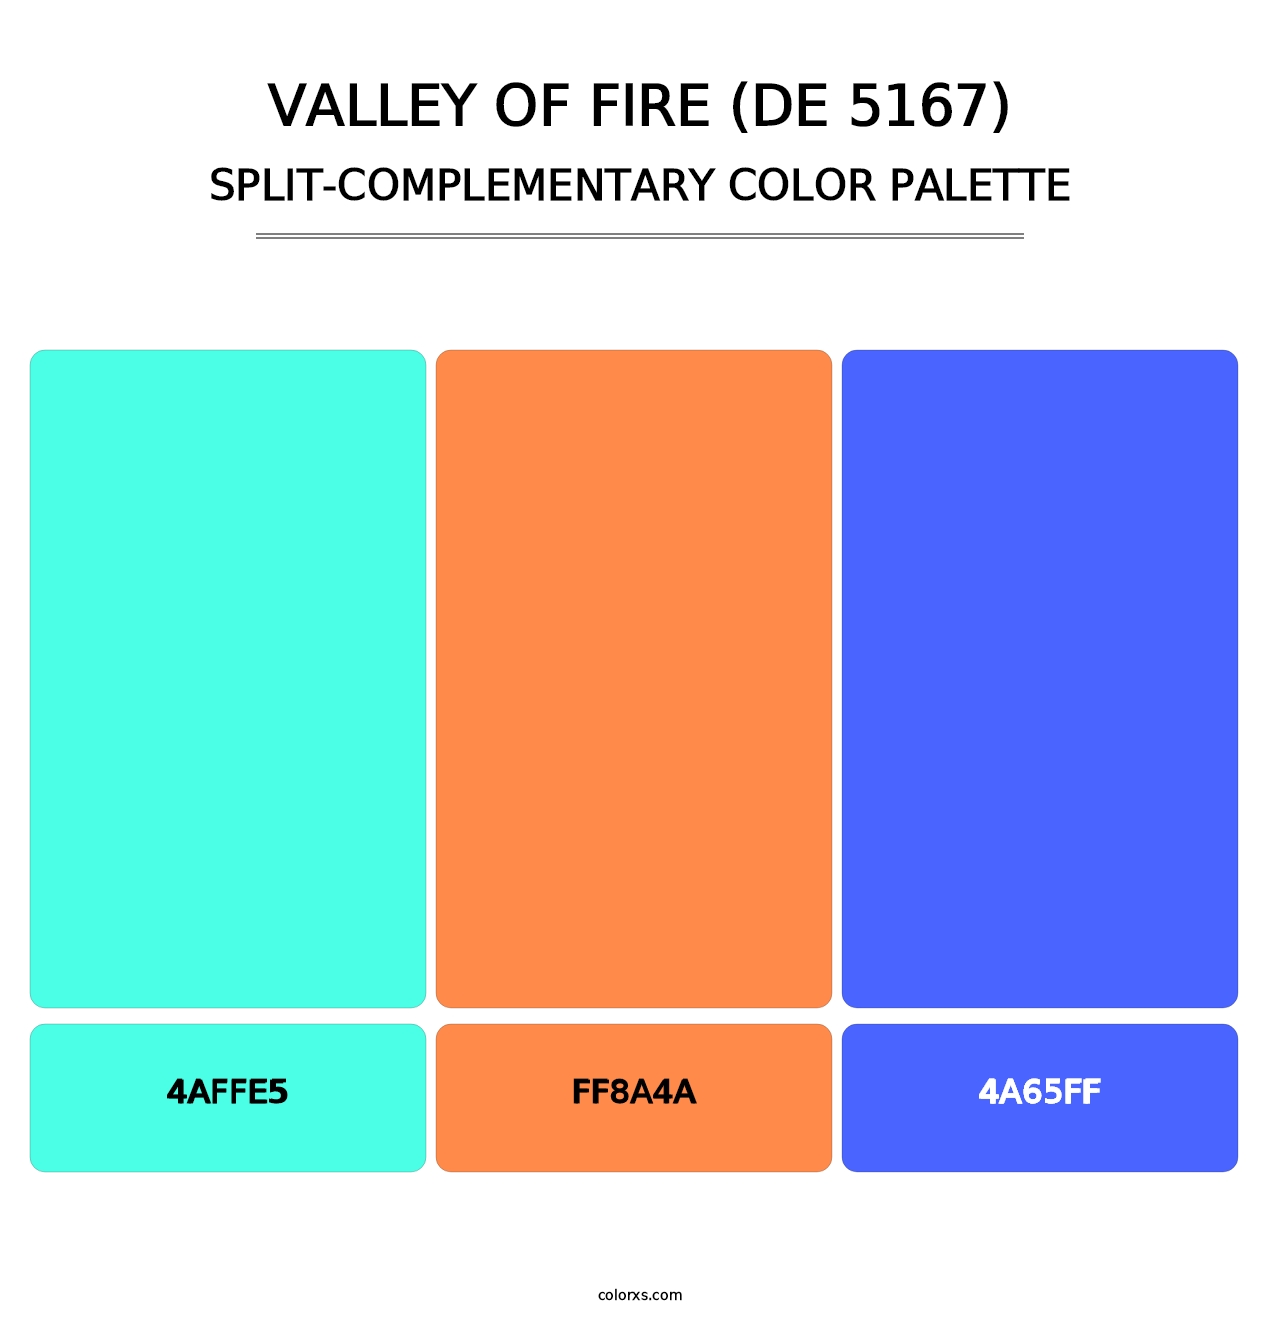 Valley of Fire (DE 5167) - Split-Complementary Color Palette